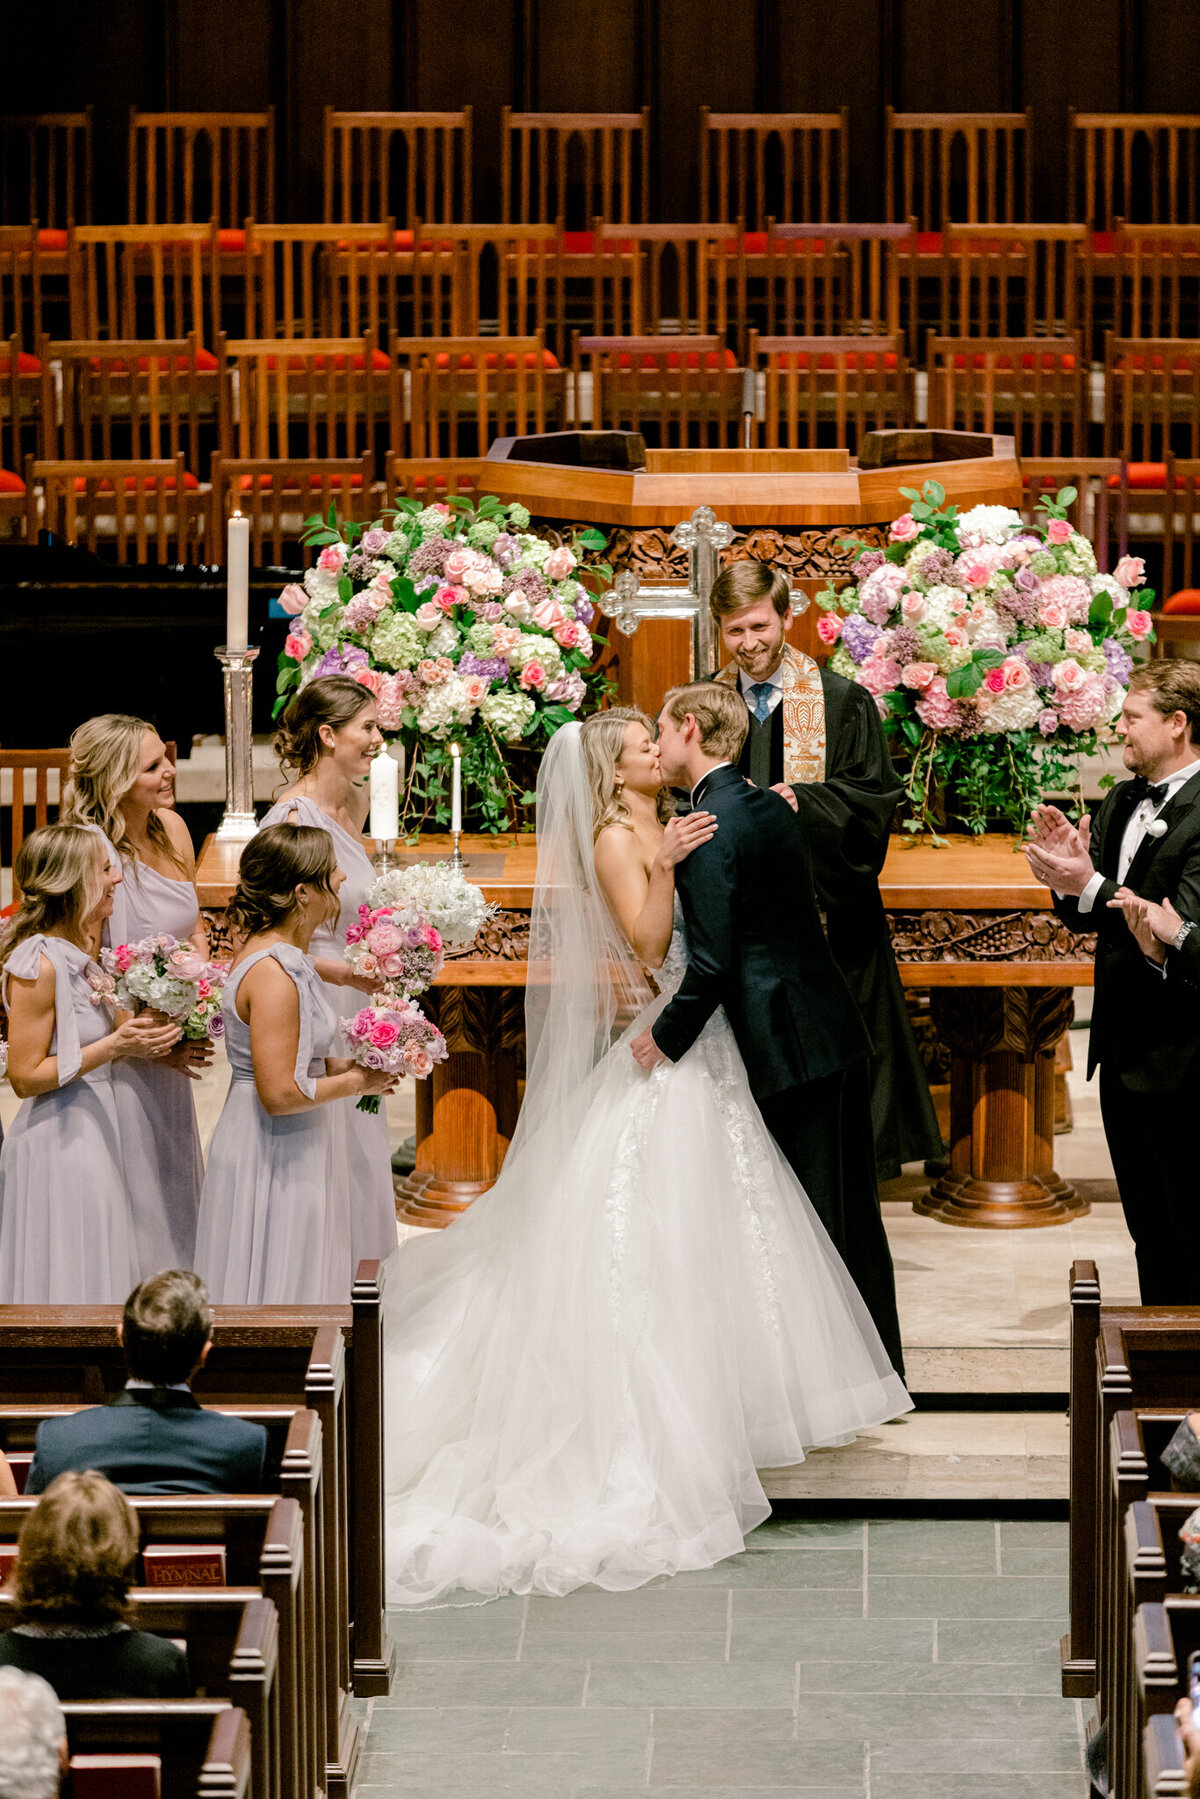 Shelby & Thomas's Wedding at HPUMC The Room on Main | Dallas Wedding Photographer | Sami Kathryn Photography-129